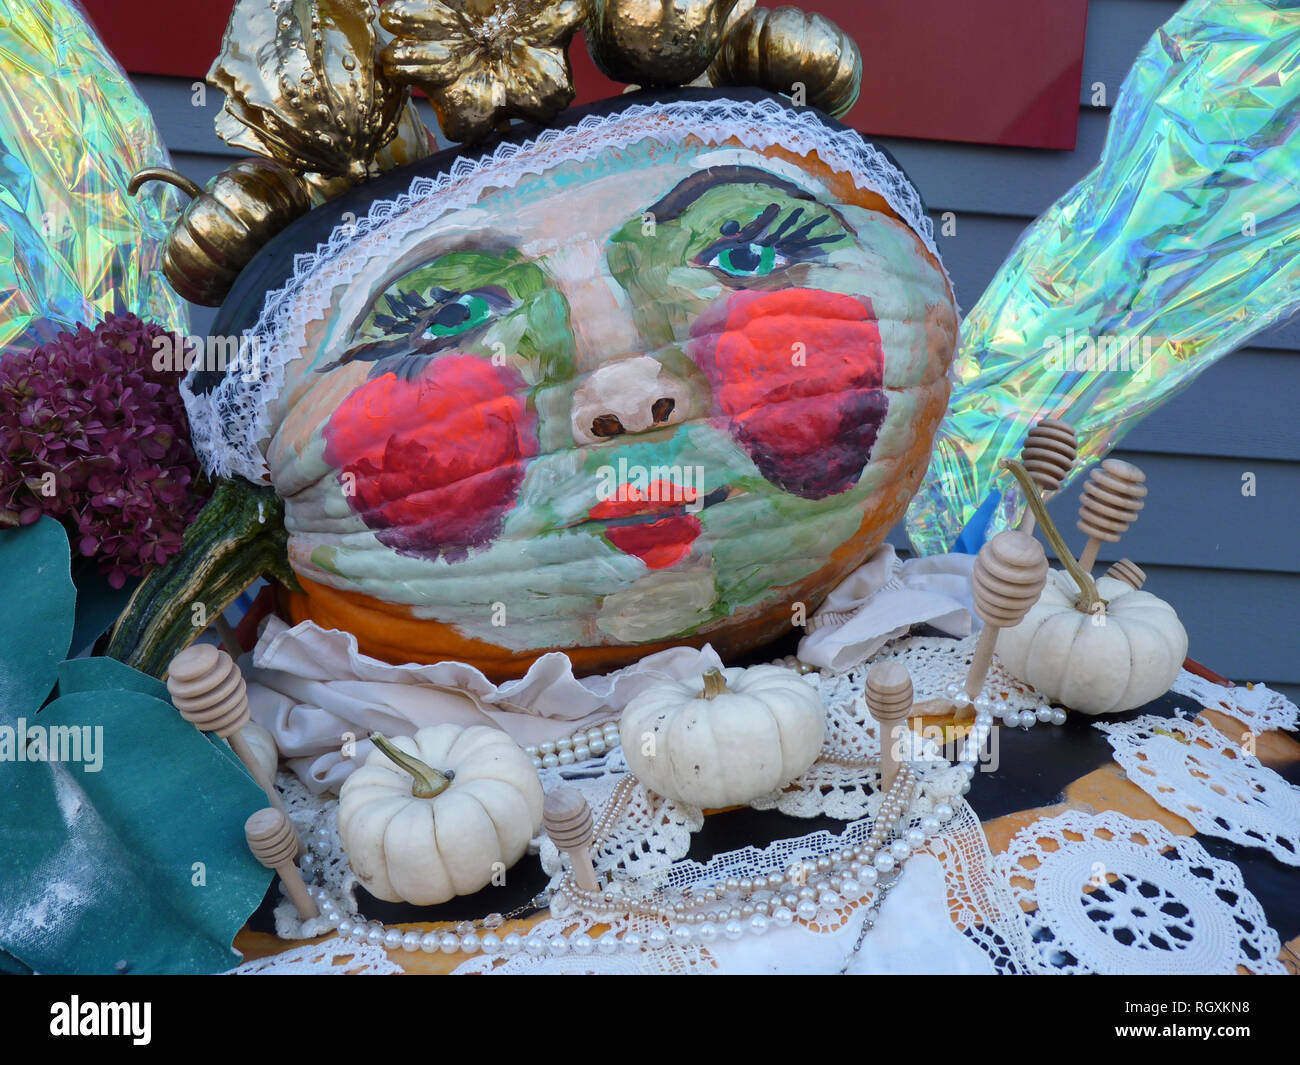 The Queen bee pumpkin: A painted pumpkin with expressive face at the Damariscotta pumpkin festival, Maine, USA Stock Photo